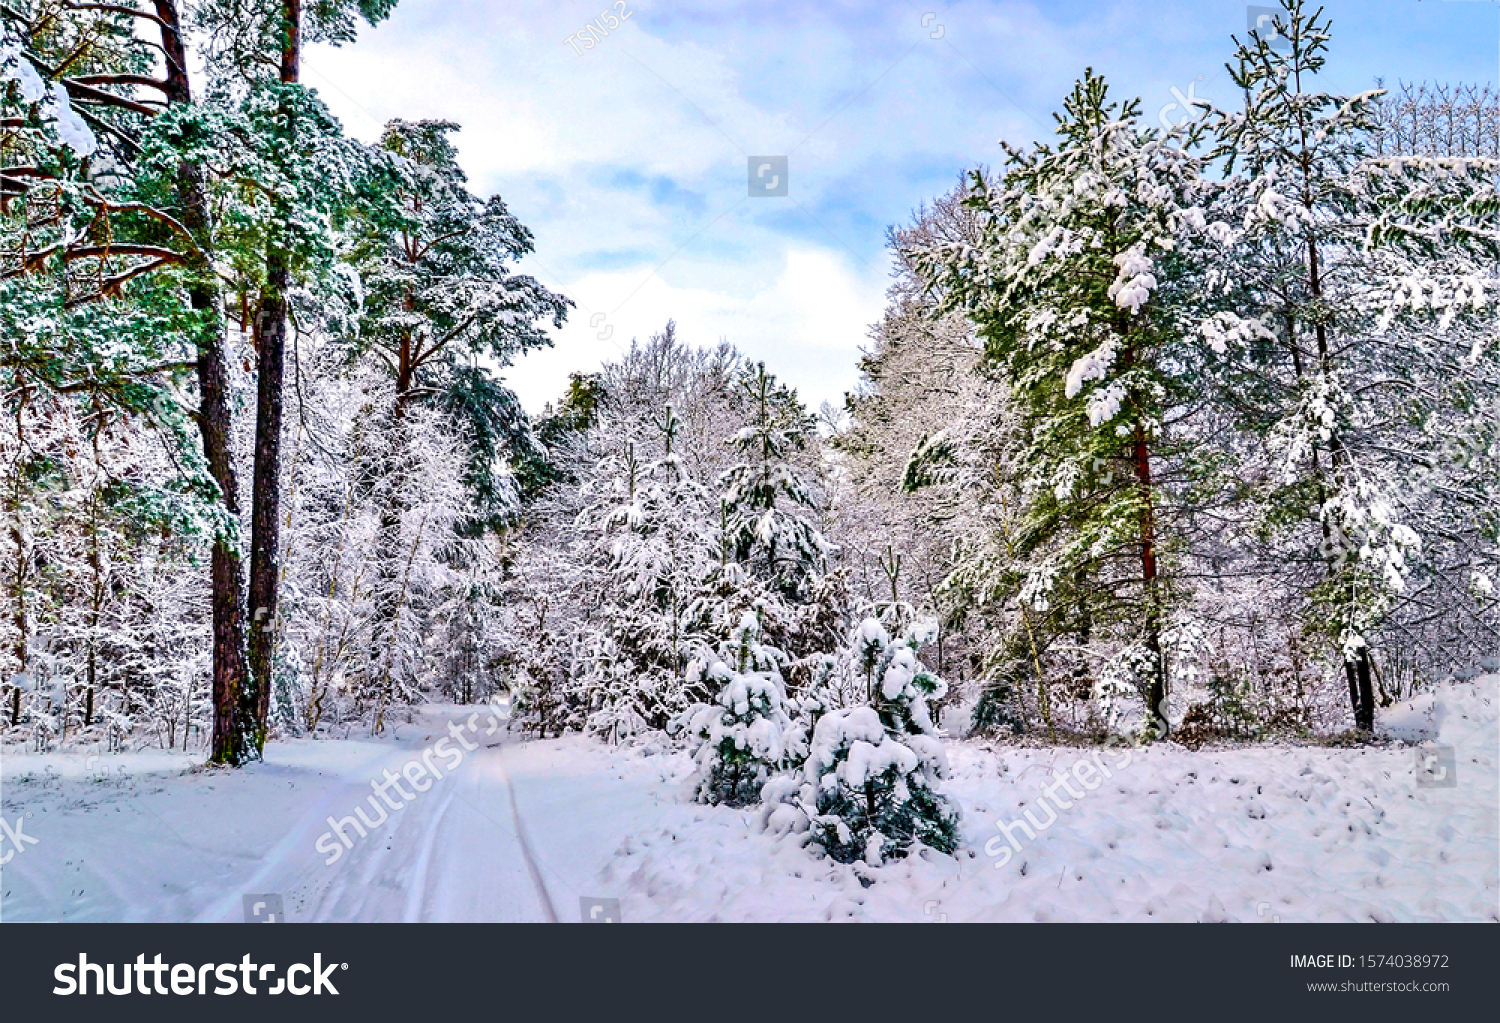 Snowy forest on winter landscape #1574038972